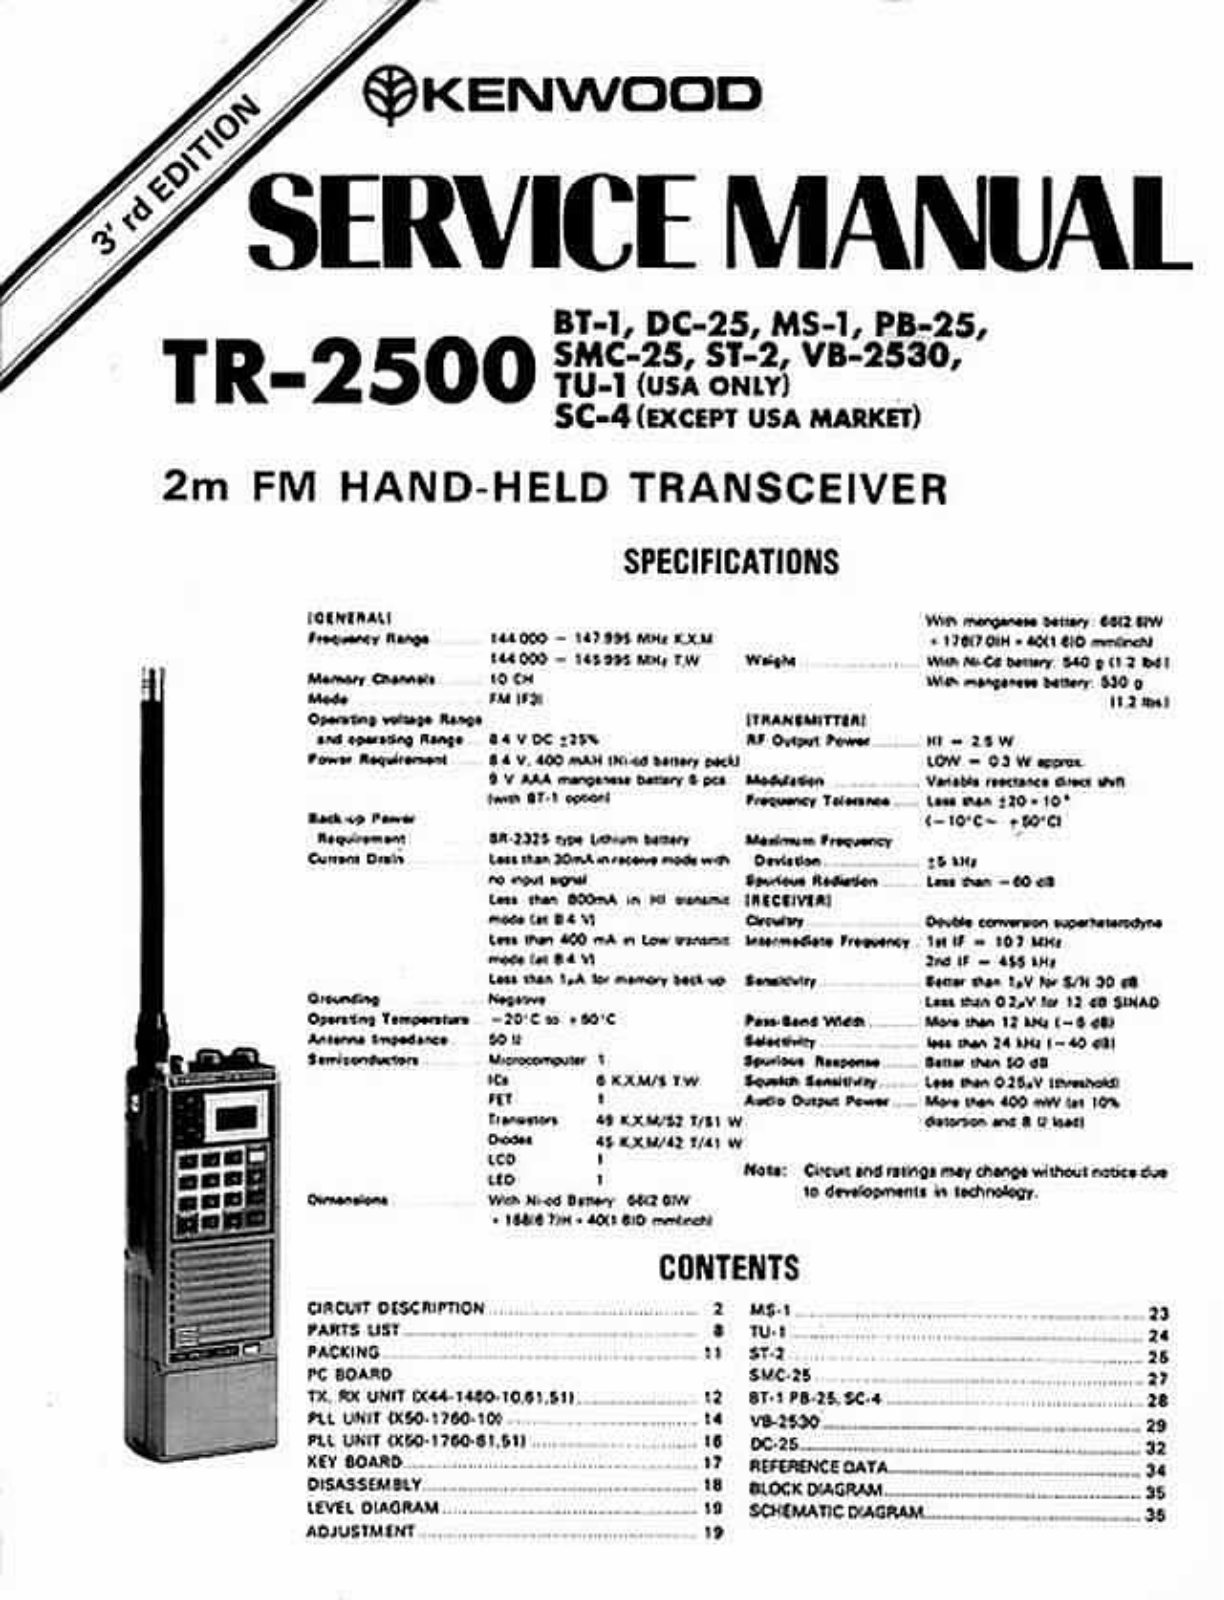 Kenwood TR-2500 Service Manual